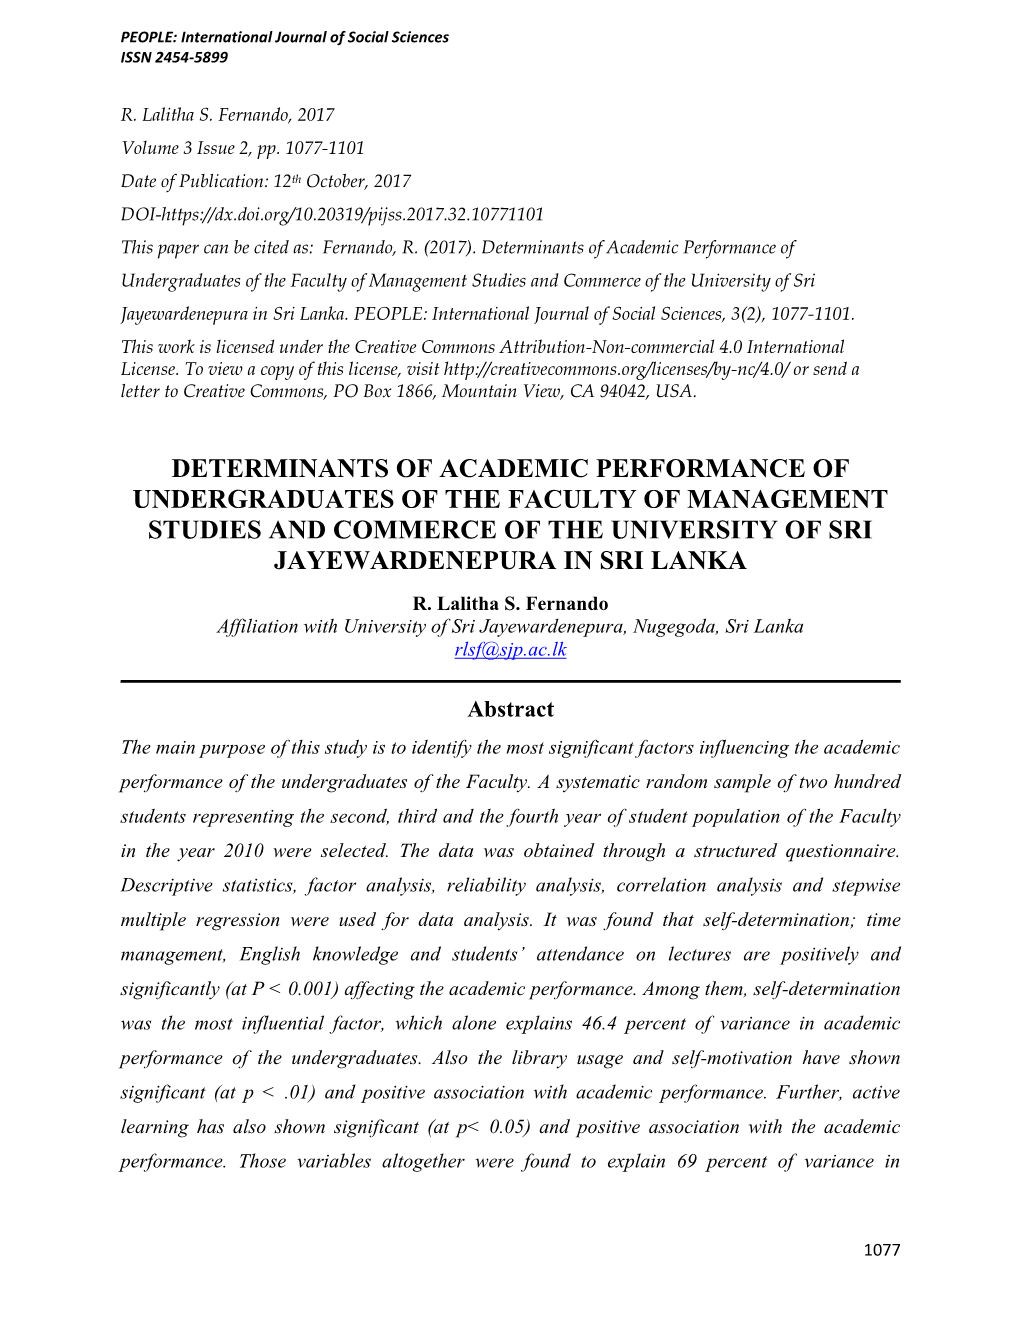 Determinants of Academic Performance of Undergraduates of the Faculty of Management Studies and Commerce of the University of Sri Jayewardenepura in Sri Lanka